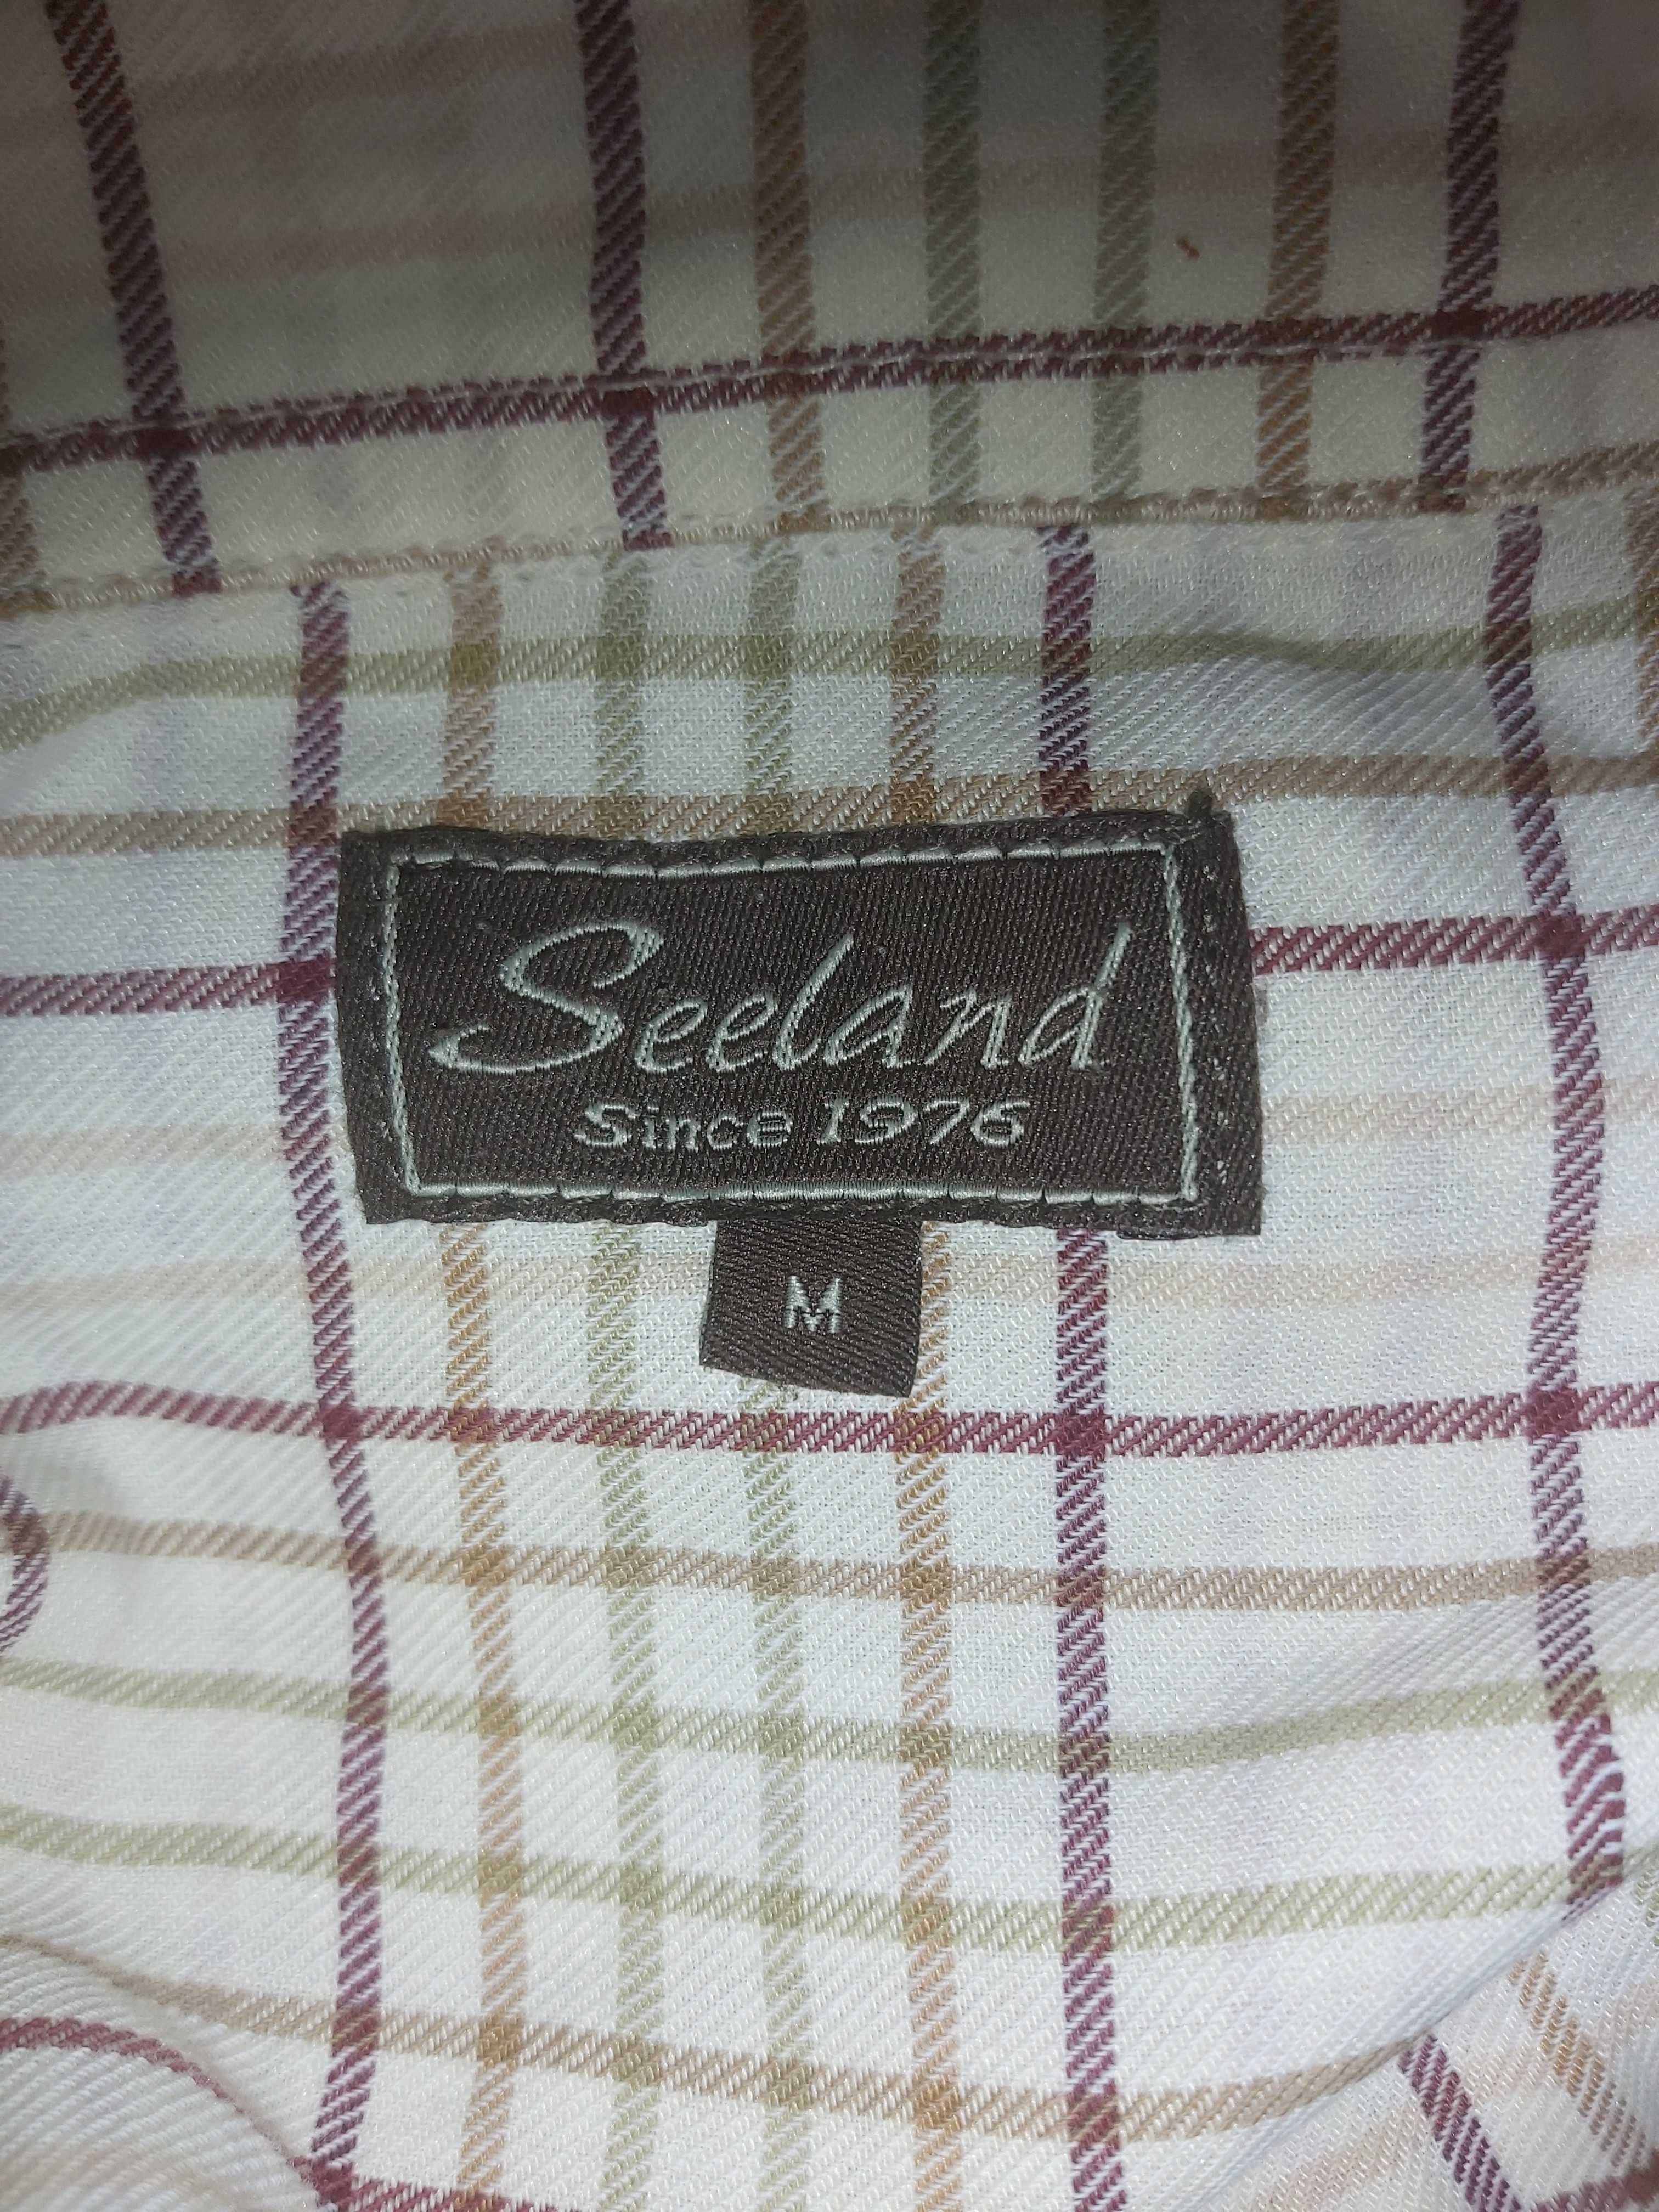 Рубашка Seeland harkila (Дания) длинный рукав.